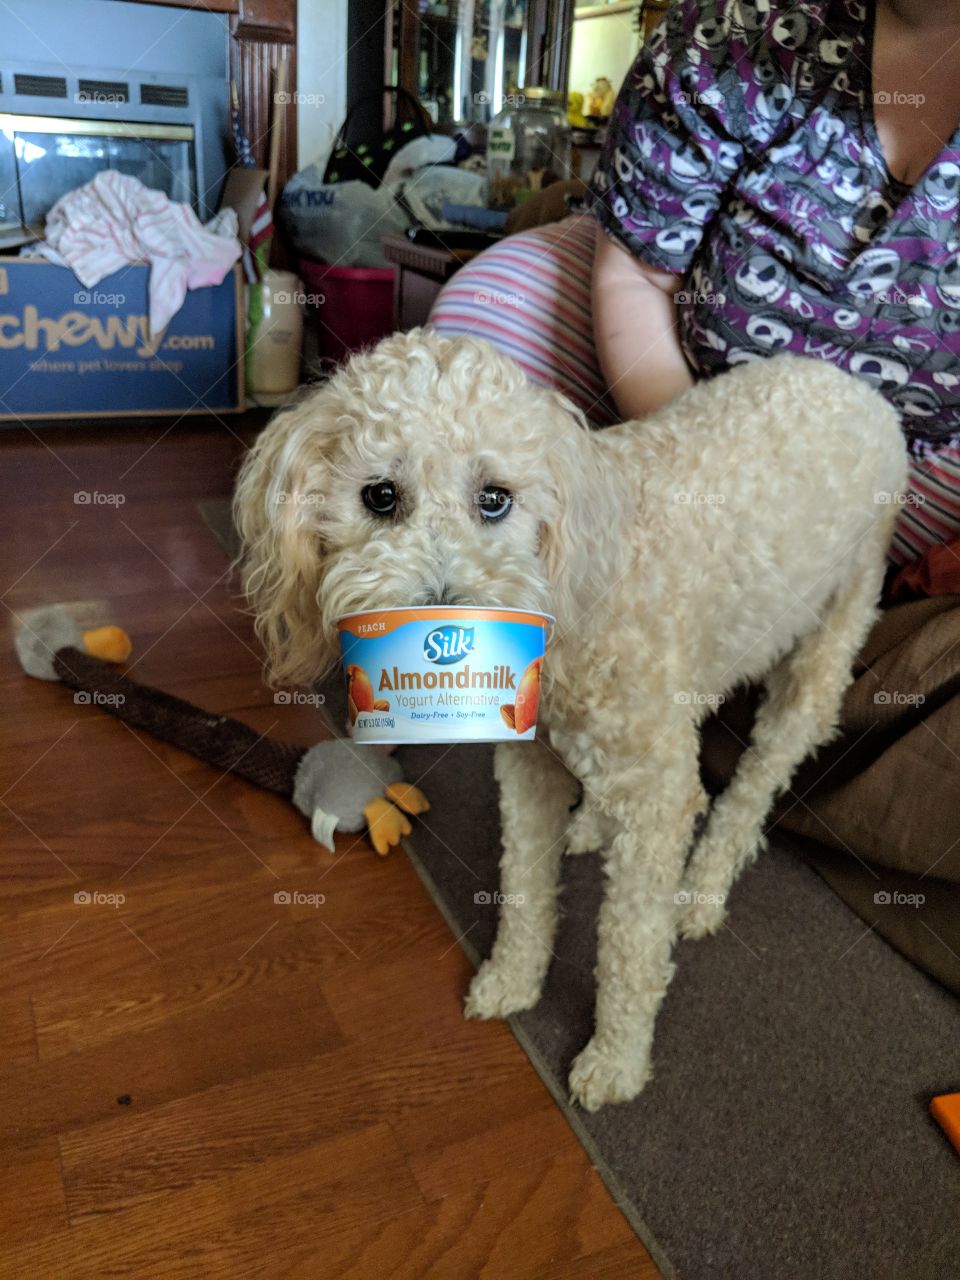 Dog enjoying Silk Almondmilk yogurt alternative